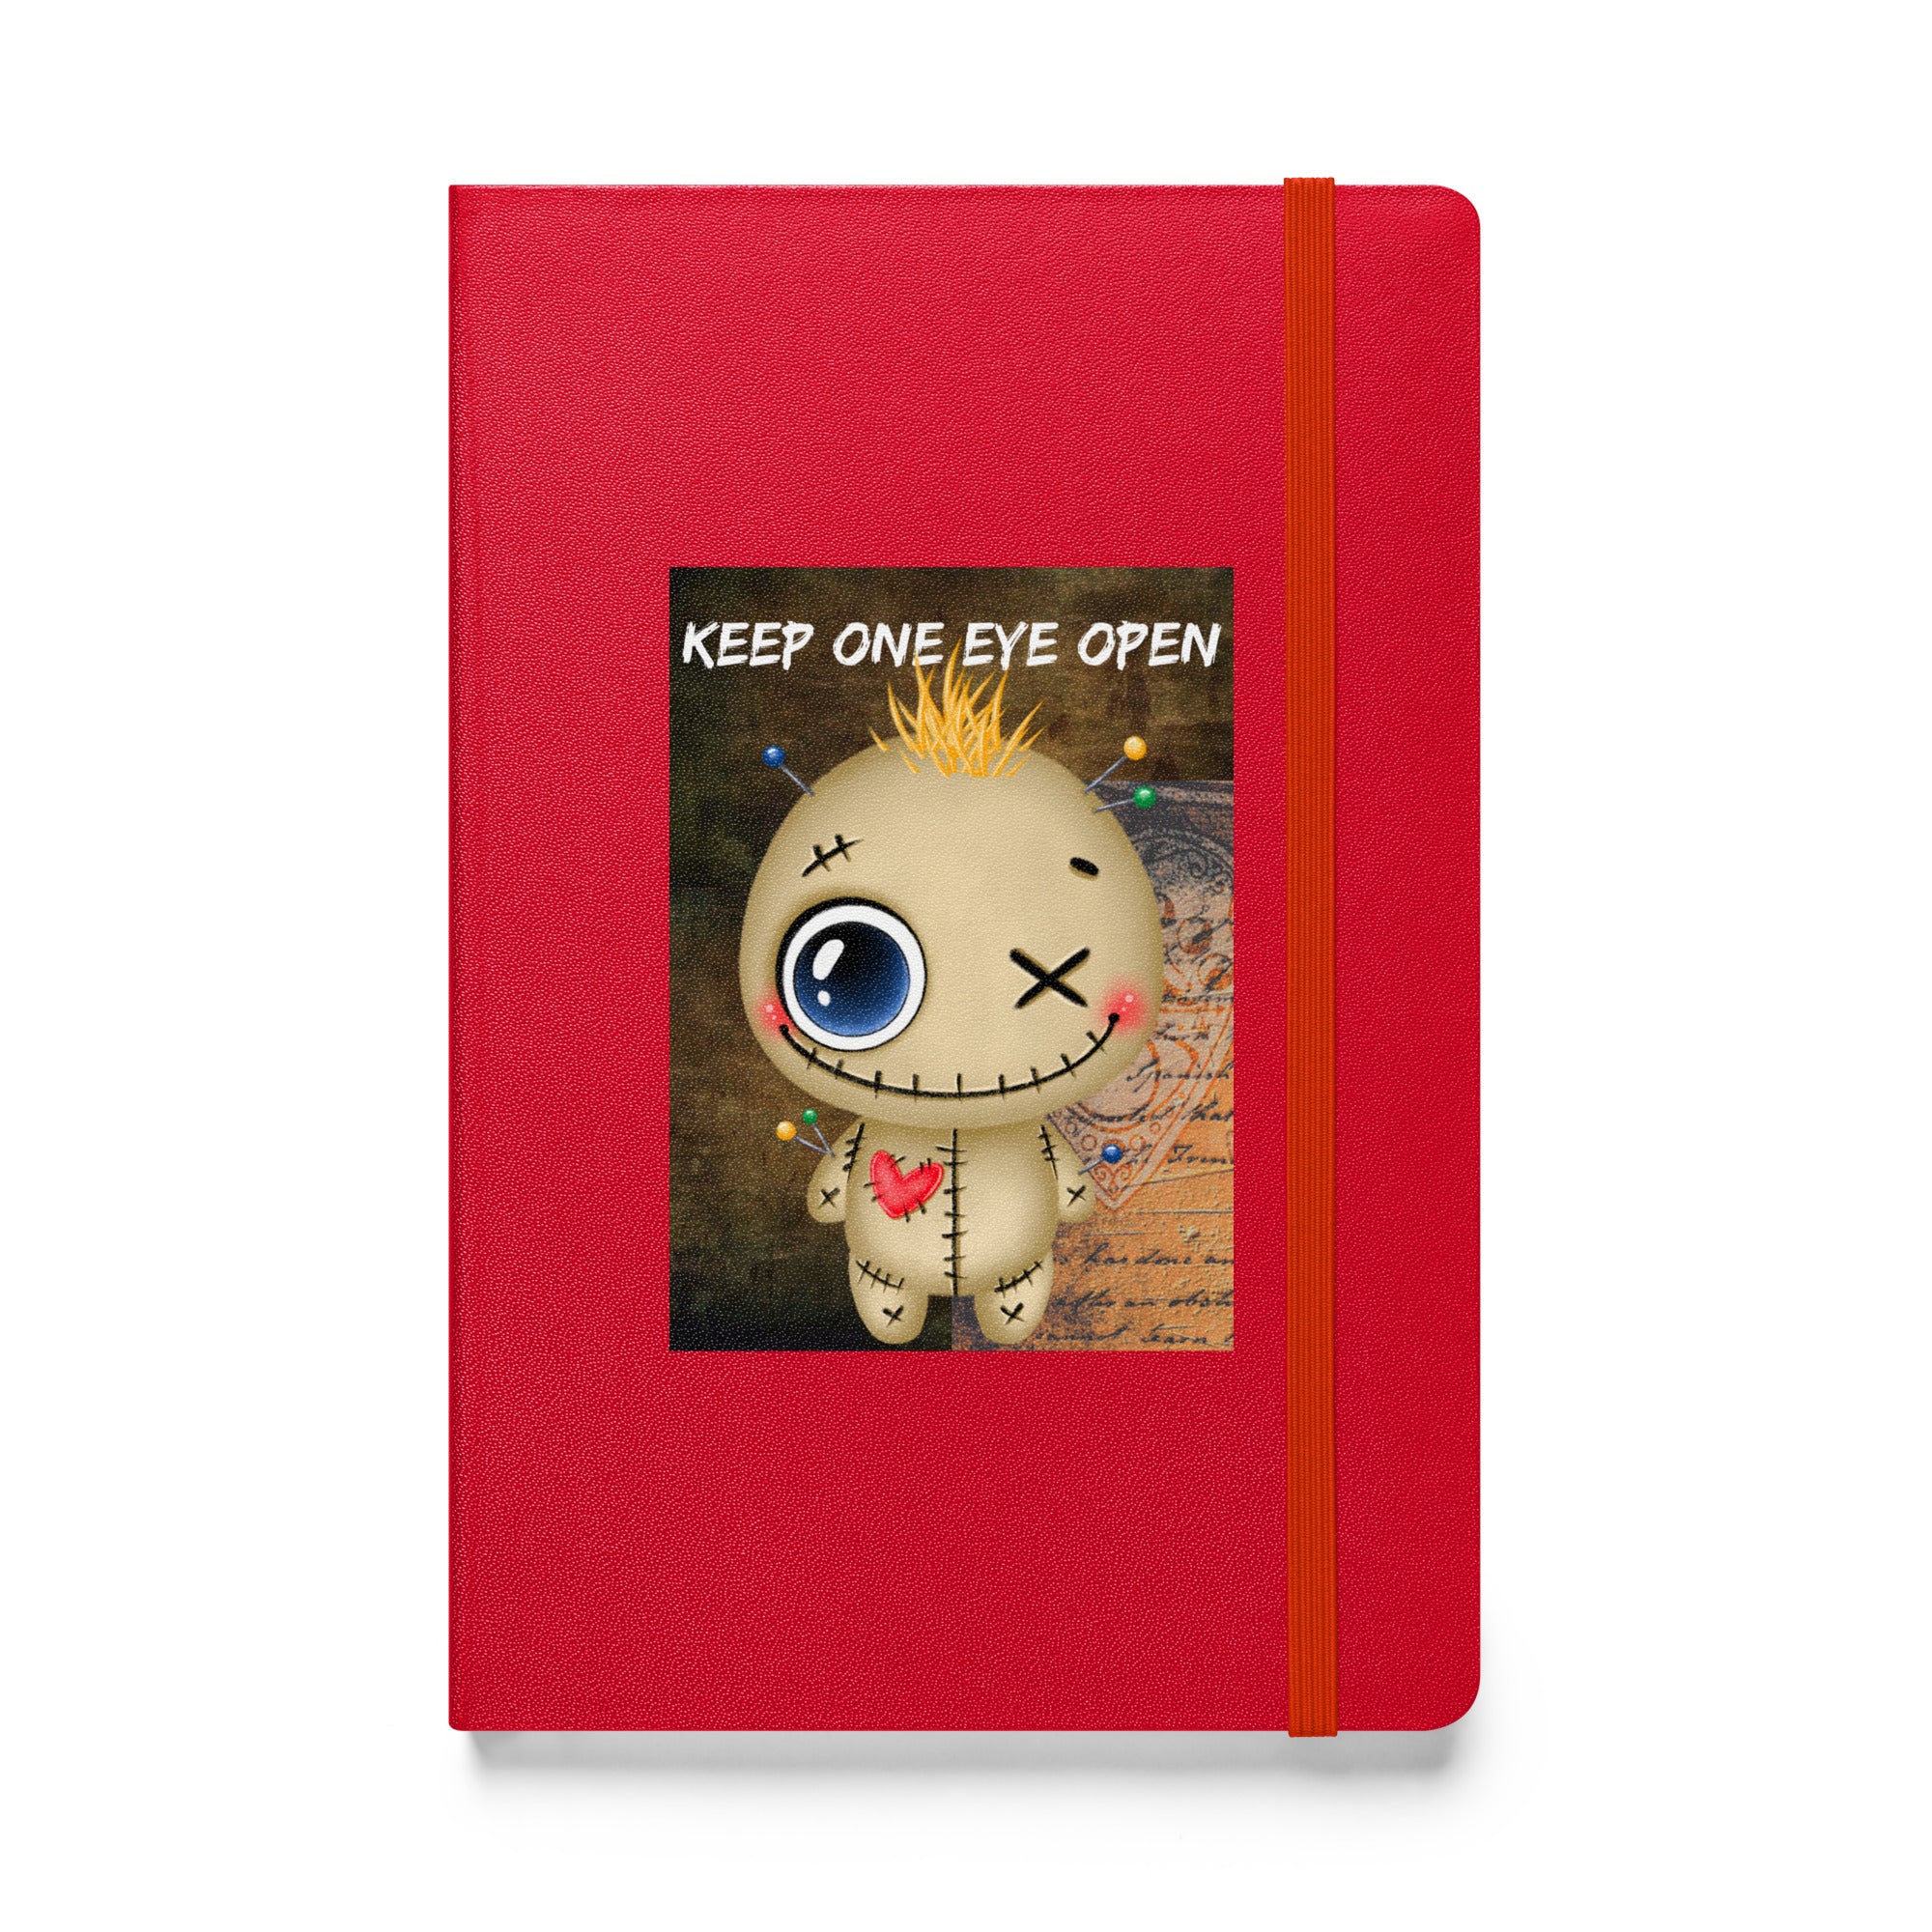 Keep One Eye Open Voodoo Doll Hardcover bound notebook